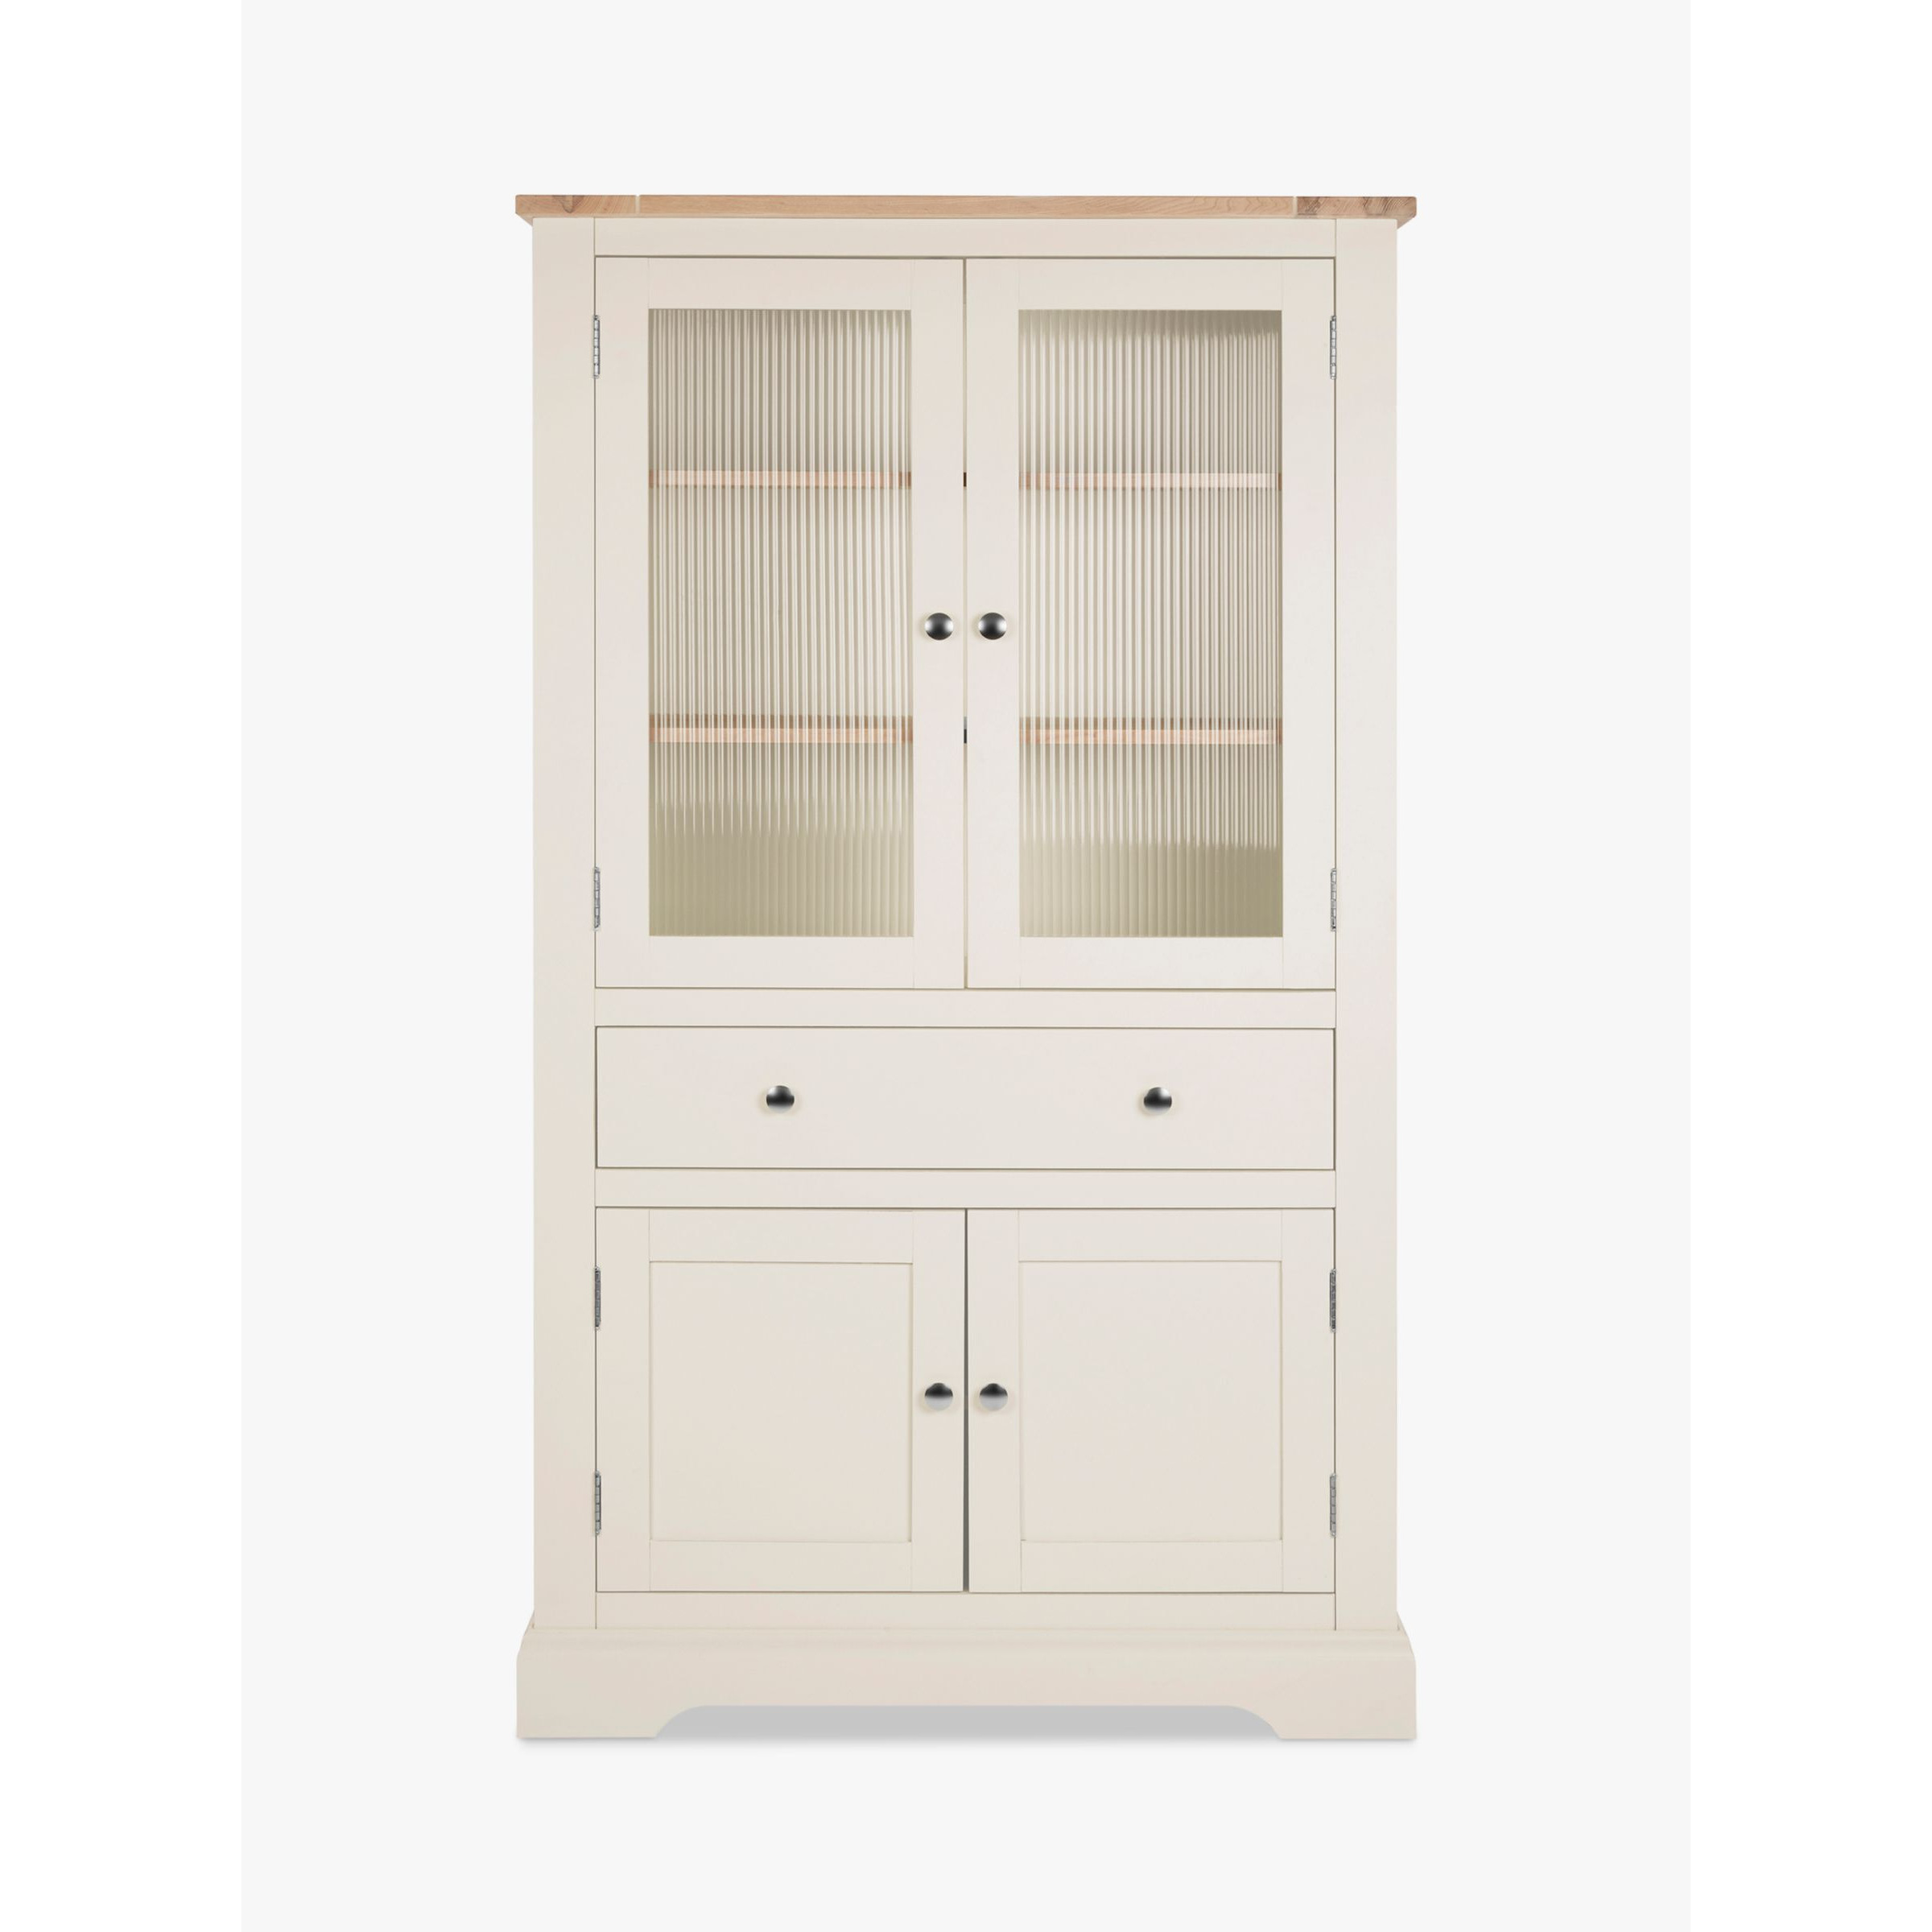 Laura Ashley Dorset Storage Cabinet, White/Natural - image 1